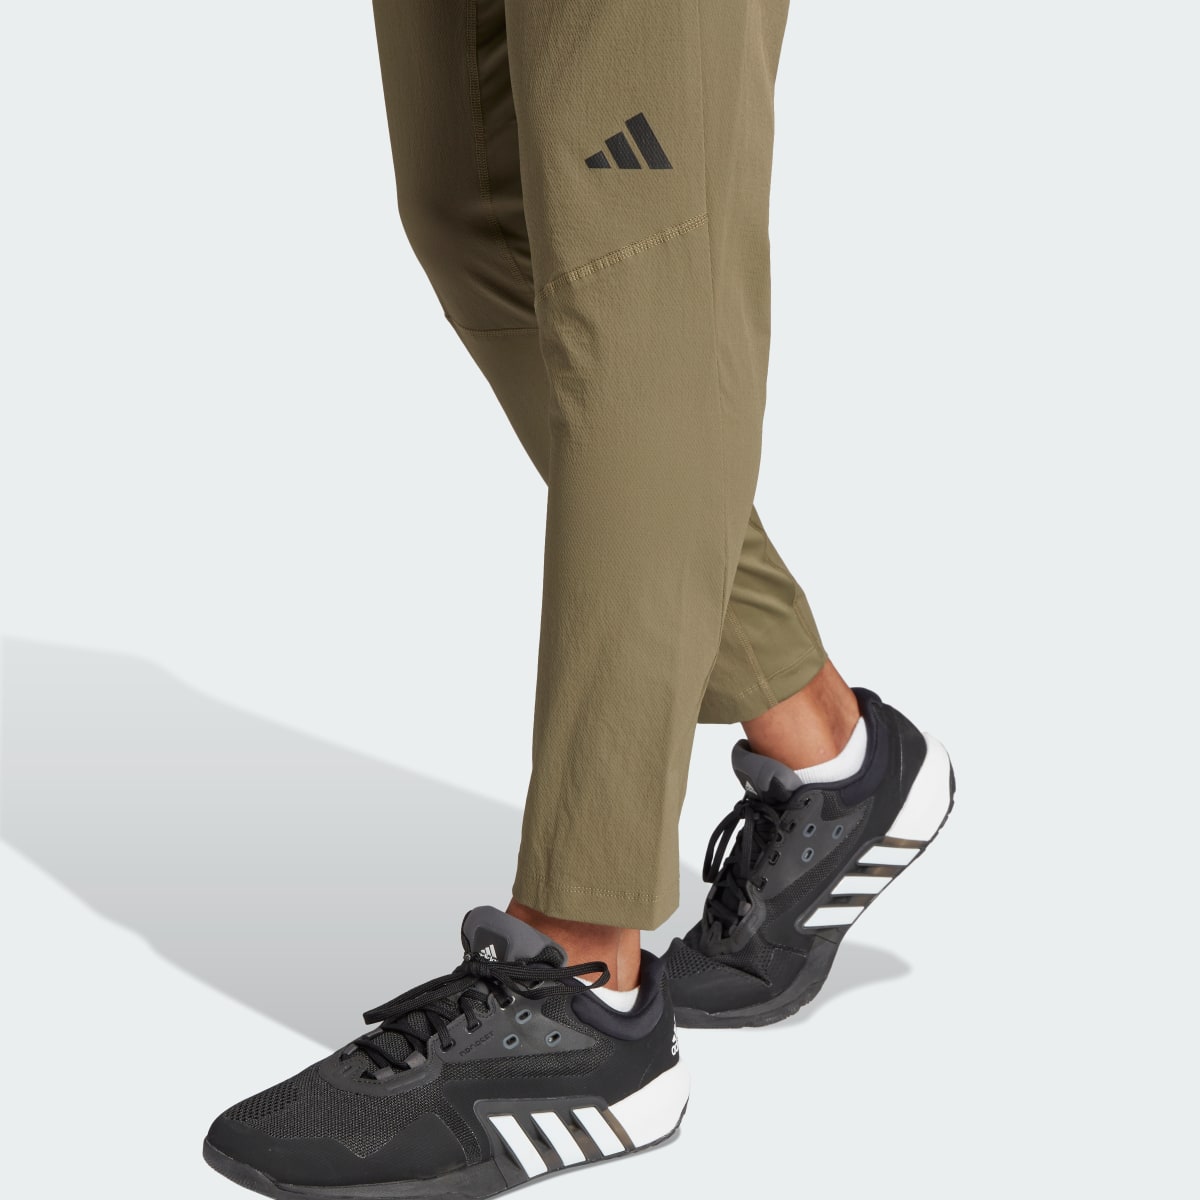 Adidas Designed for Training CORDURA Workout Pants. 8